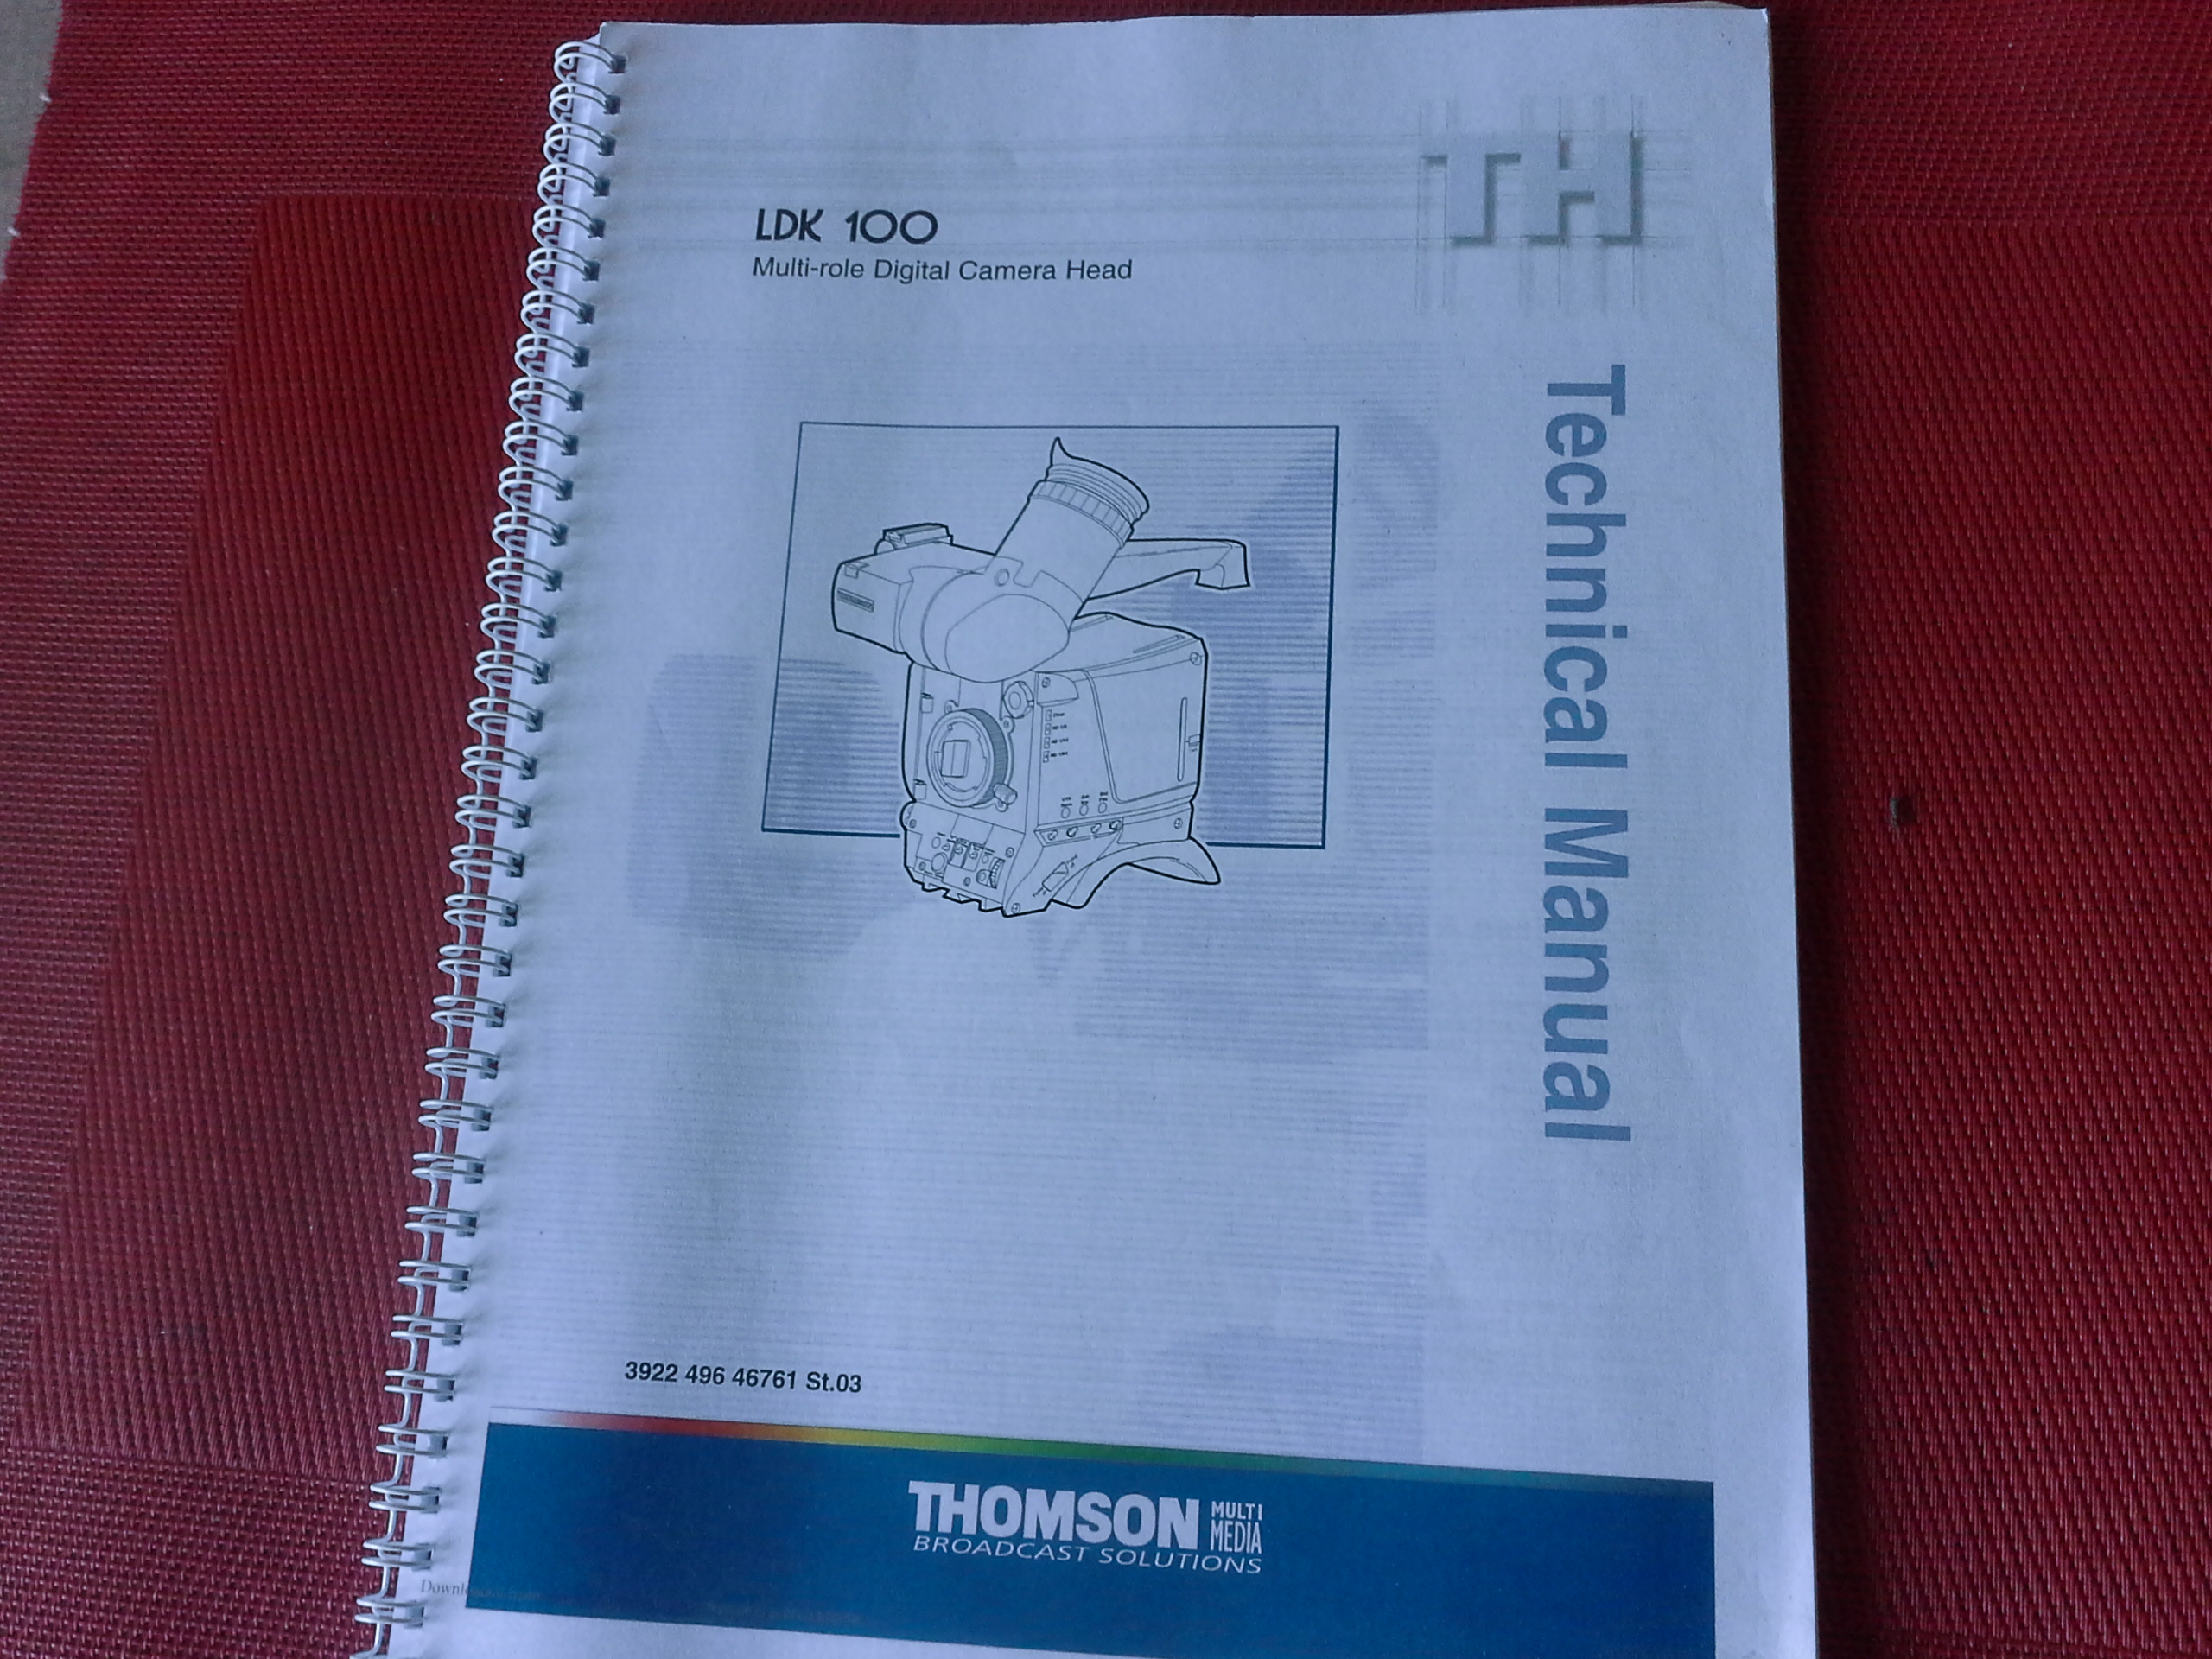 Thomson, LDK 100, Multi-role Digital Camera Head